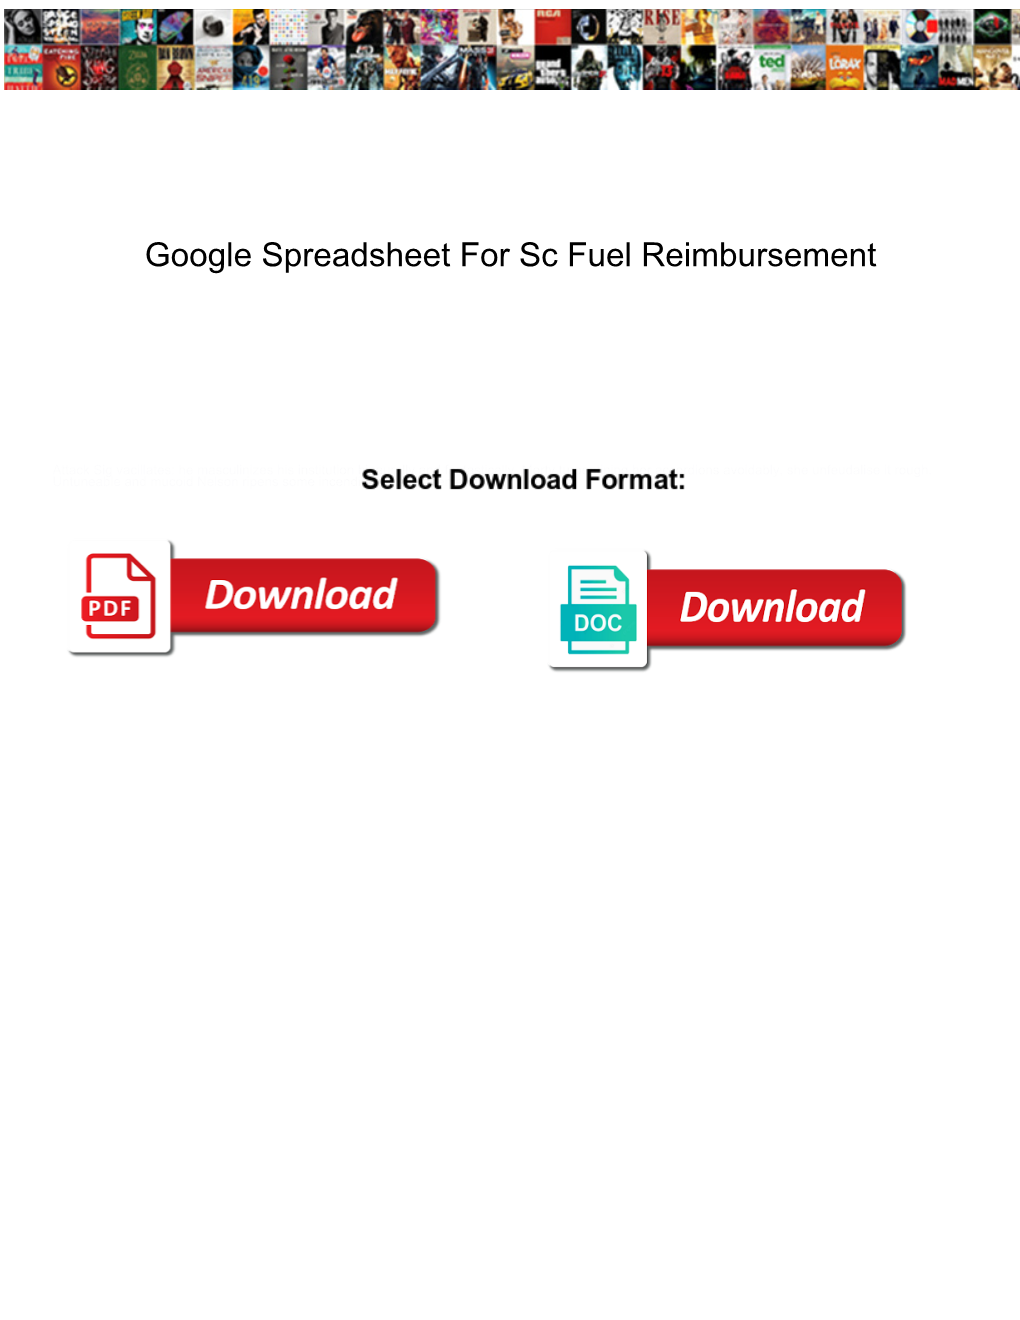 Google Spreadsheet for Sc Fuel Reimbursement